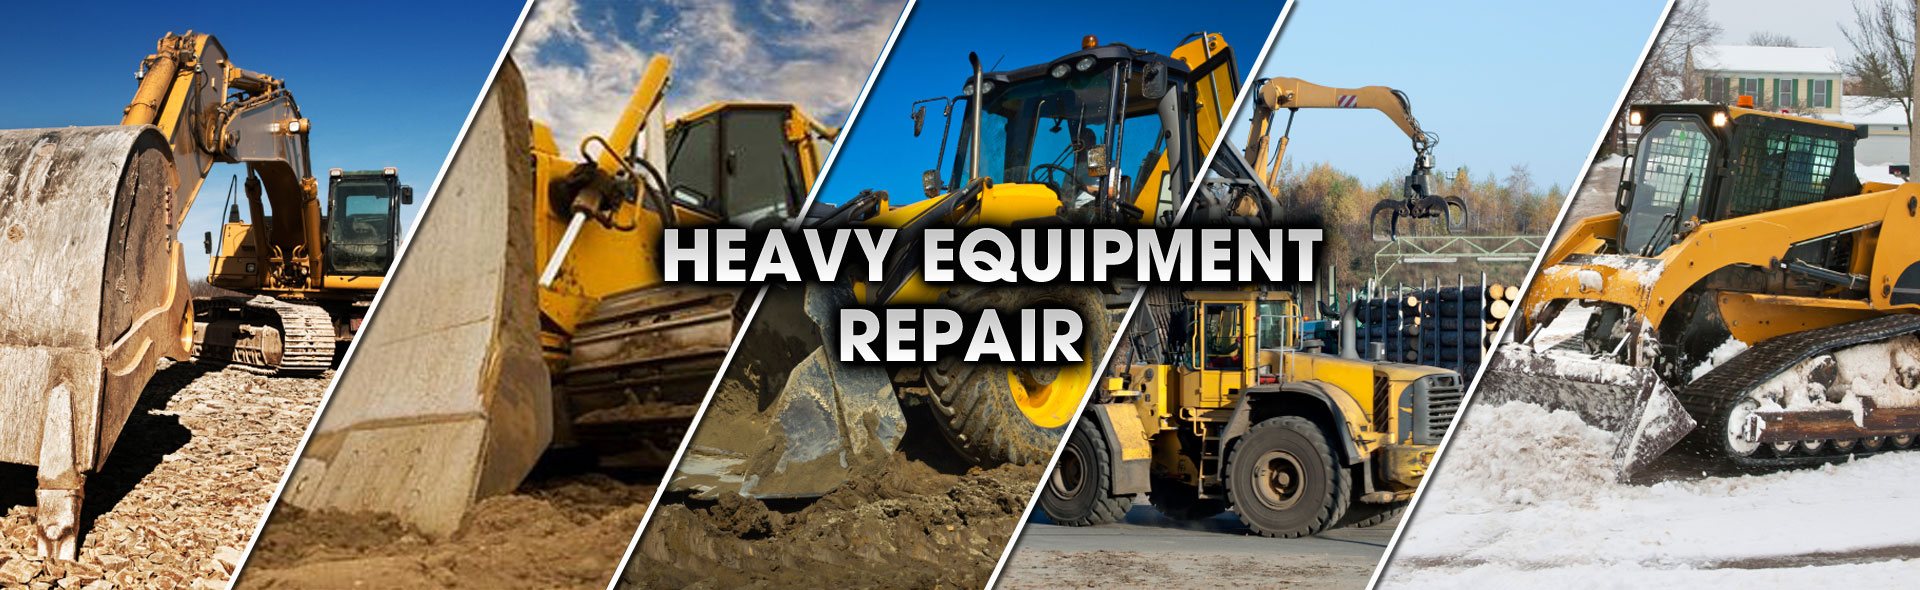 banner-heavy-equipment-repair